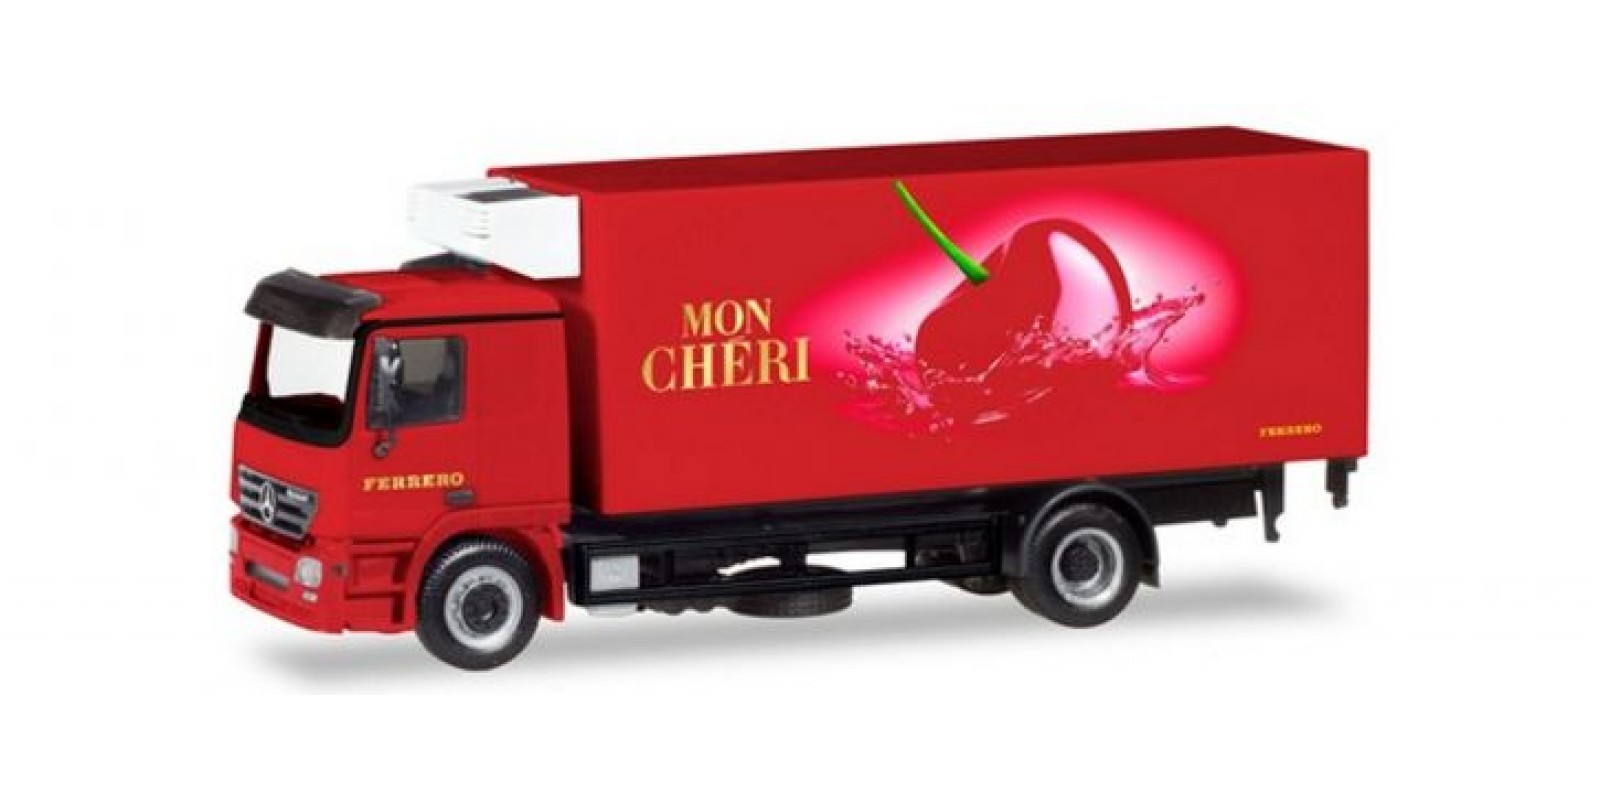 HR309448 MB Actros L '02 Refrigerated Box Truck Ferrero Mon Cheri